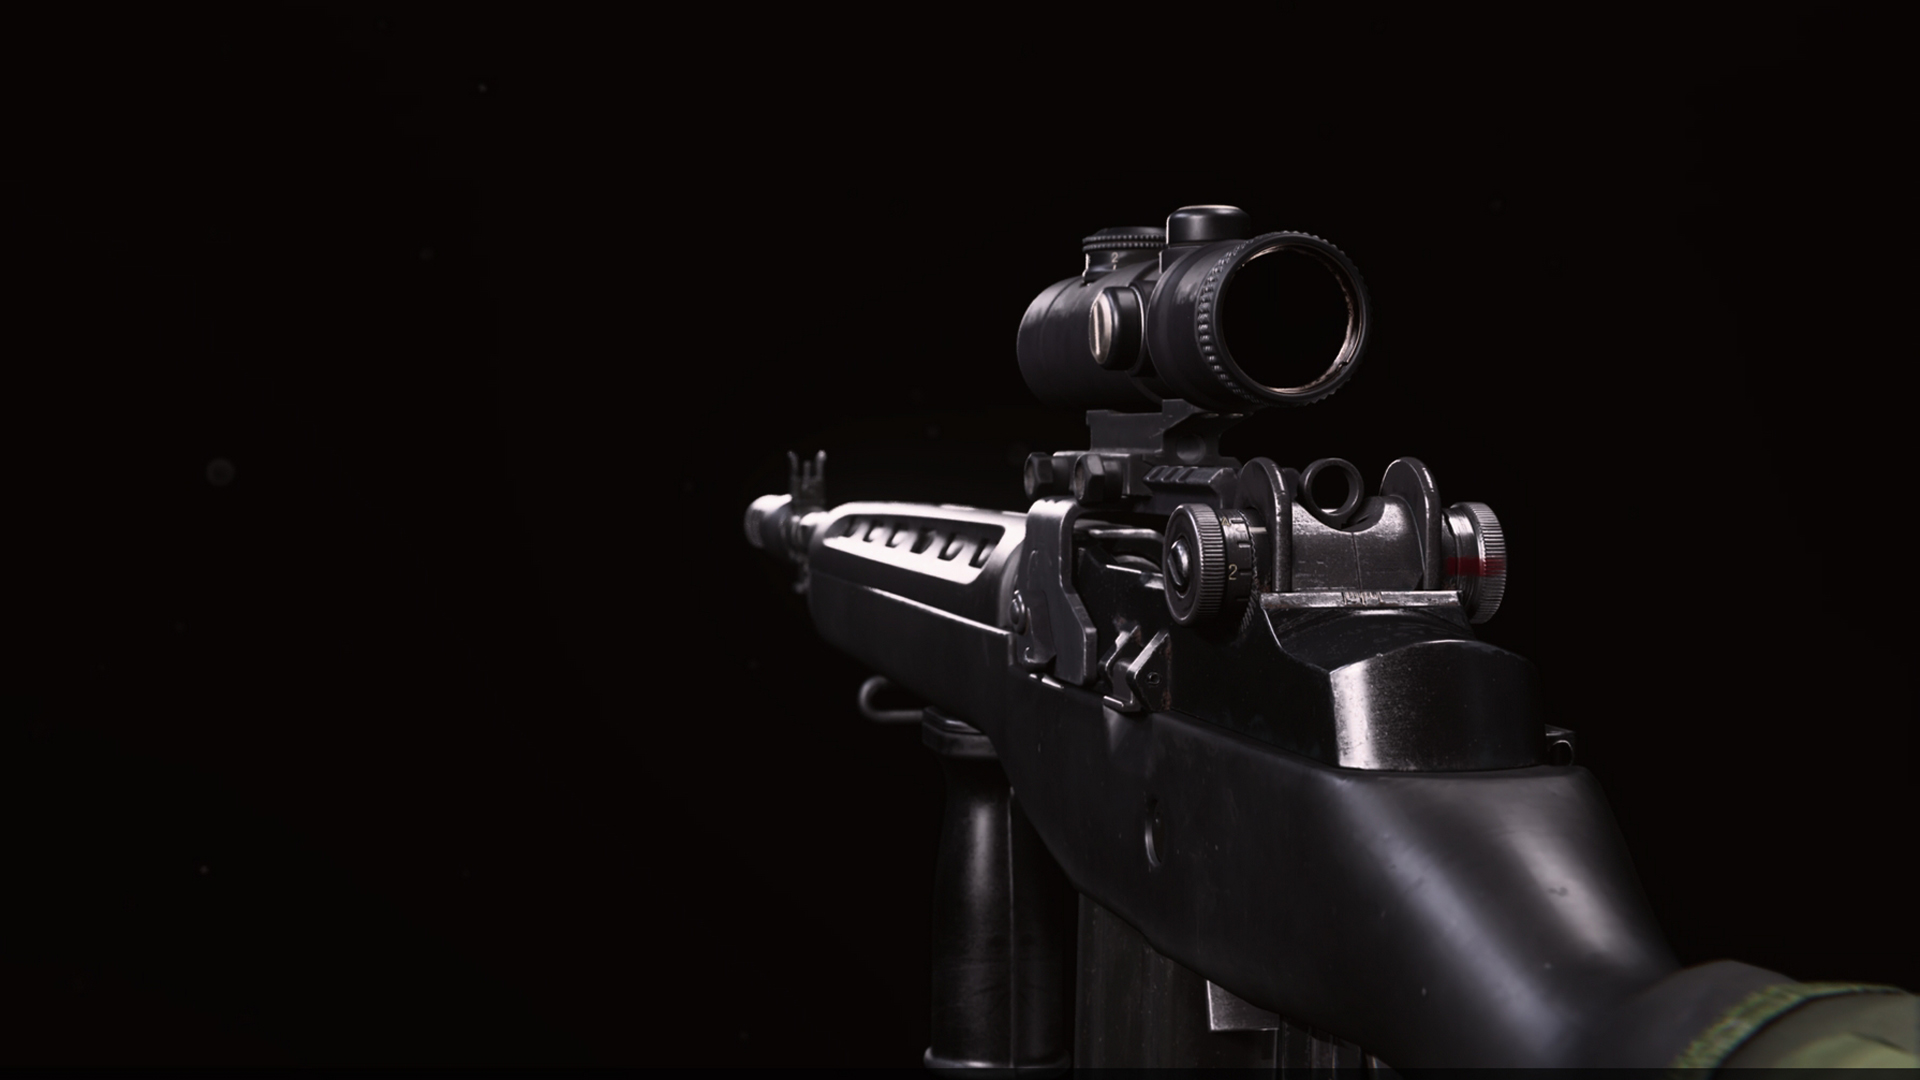 10 Best Nerf Gun Sniper Rifles for the Expert Marksman, NerfGunAttachments